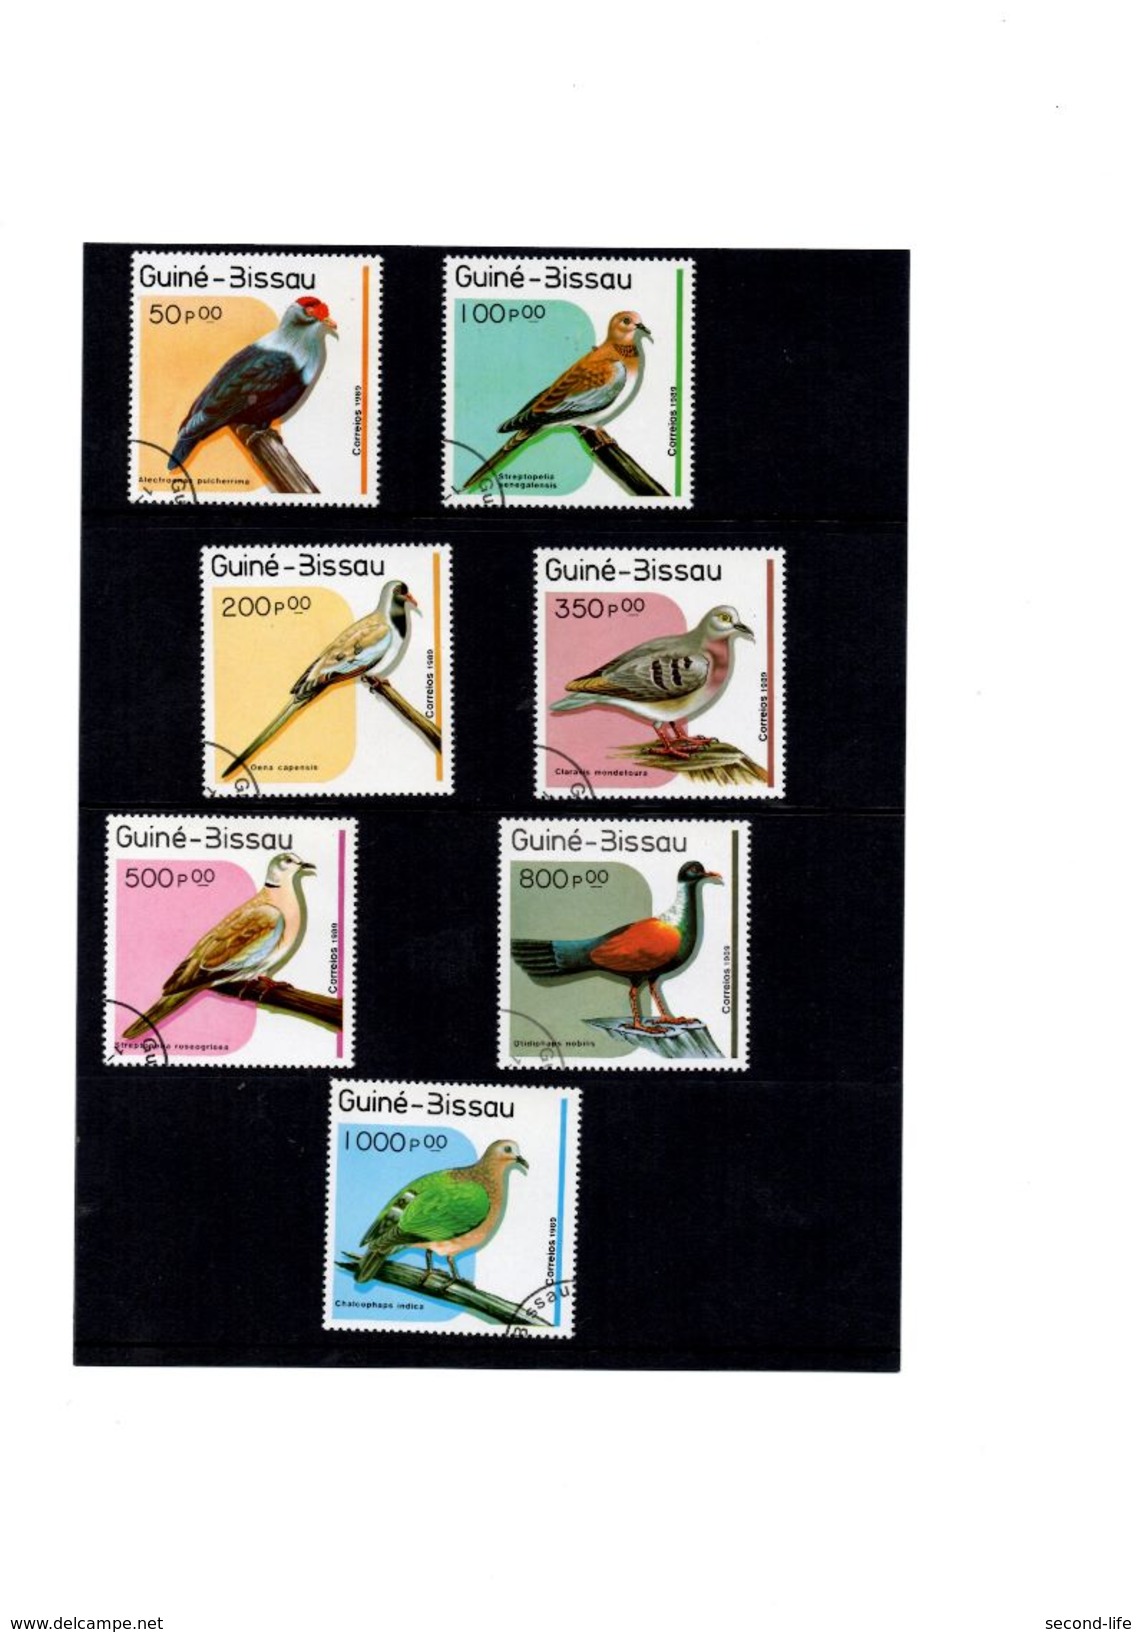 Birds - Guinea-Bissau